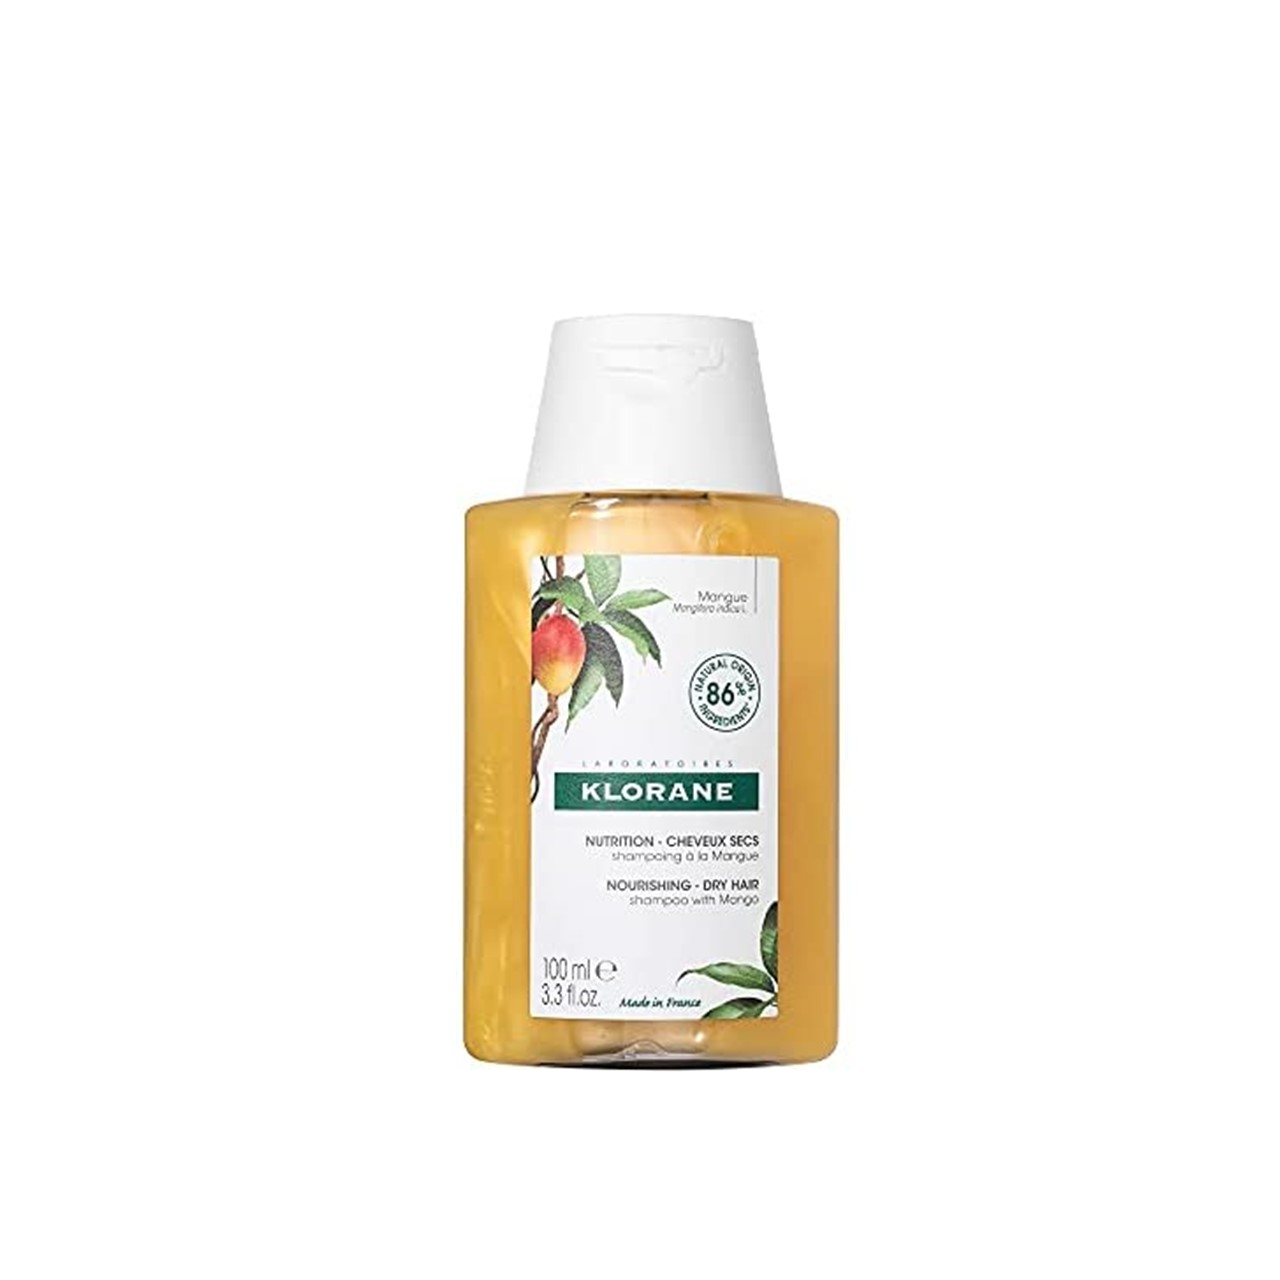 Klorane Nourishing Shampoo with Mango Butter 100ml (3.38fl oz)